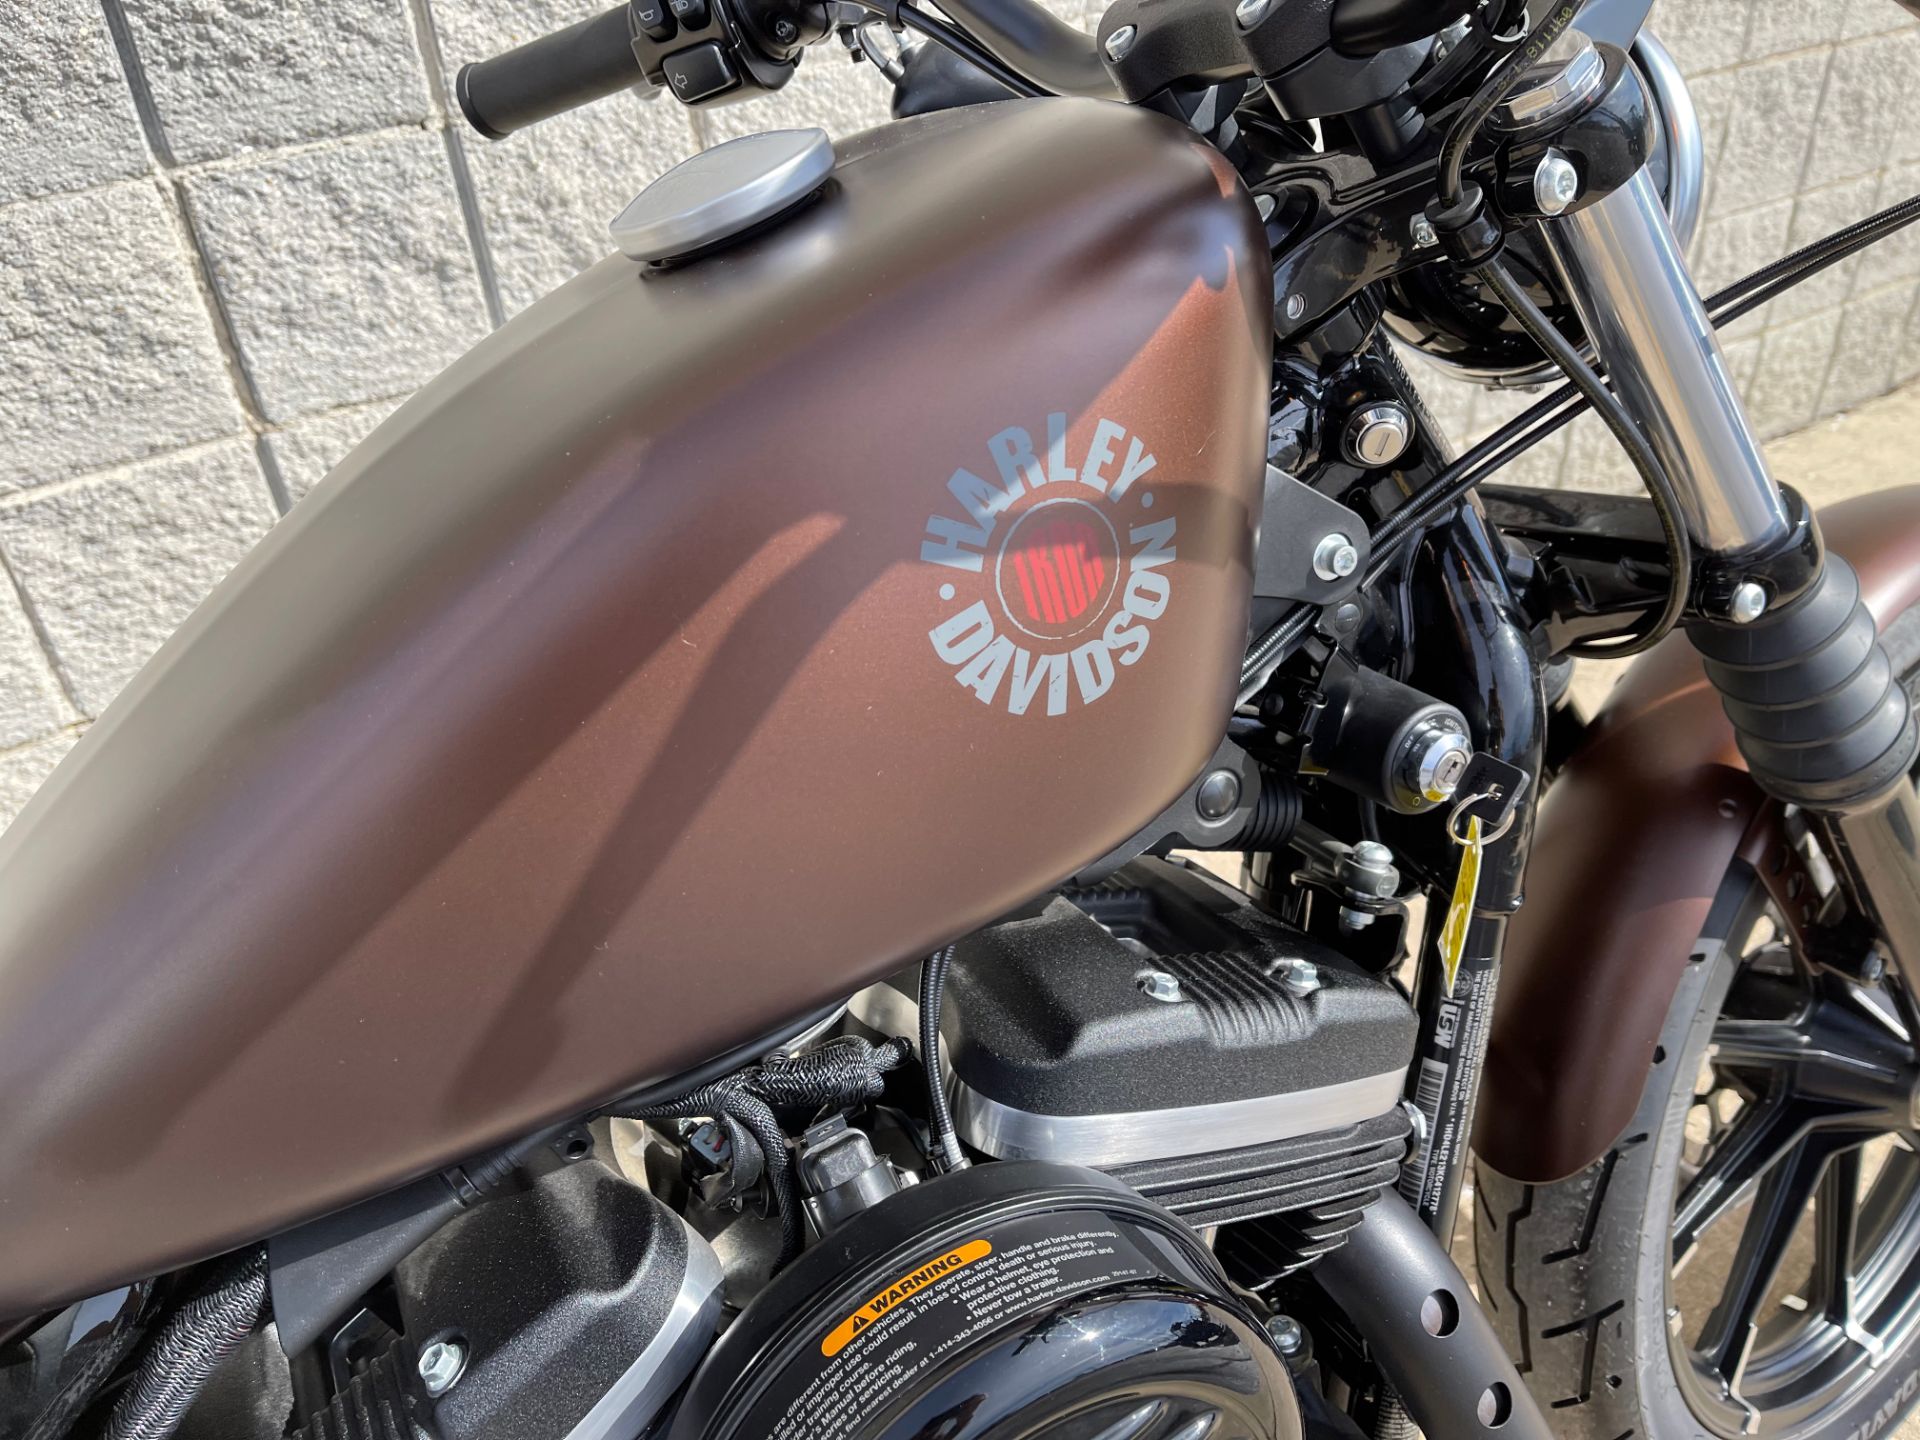 2019 Harley-Davidson Iron 883™ in Monroe, Michigan - Photo 2